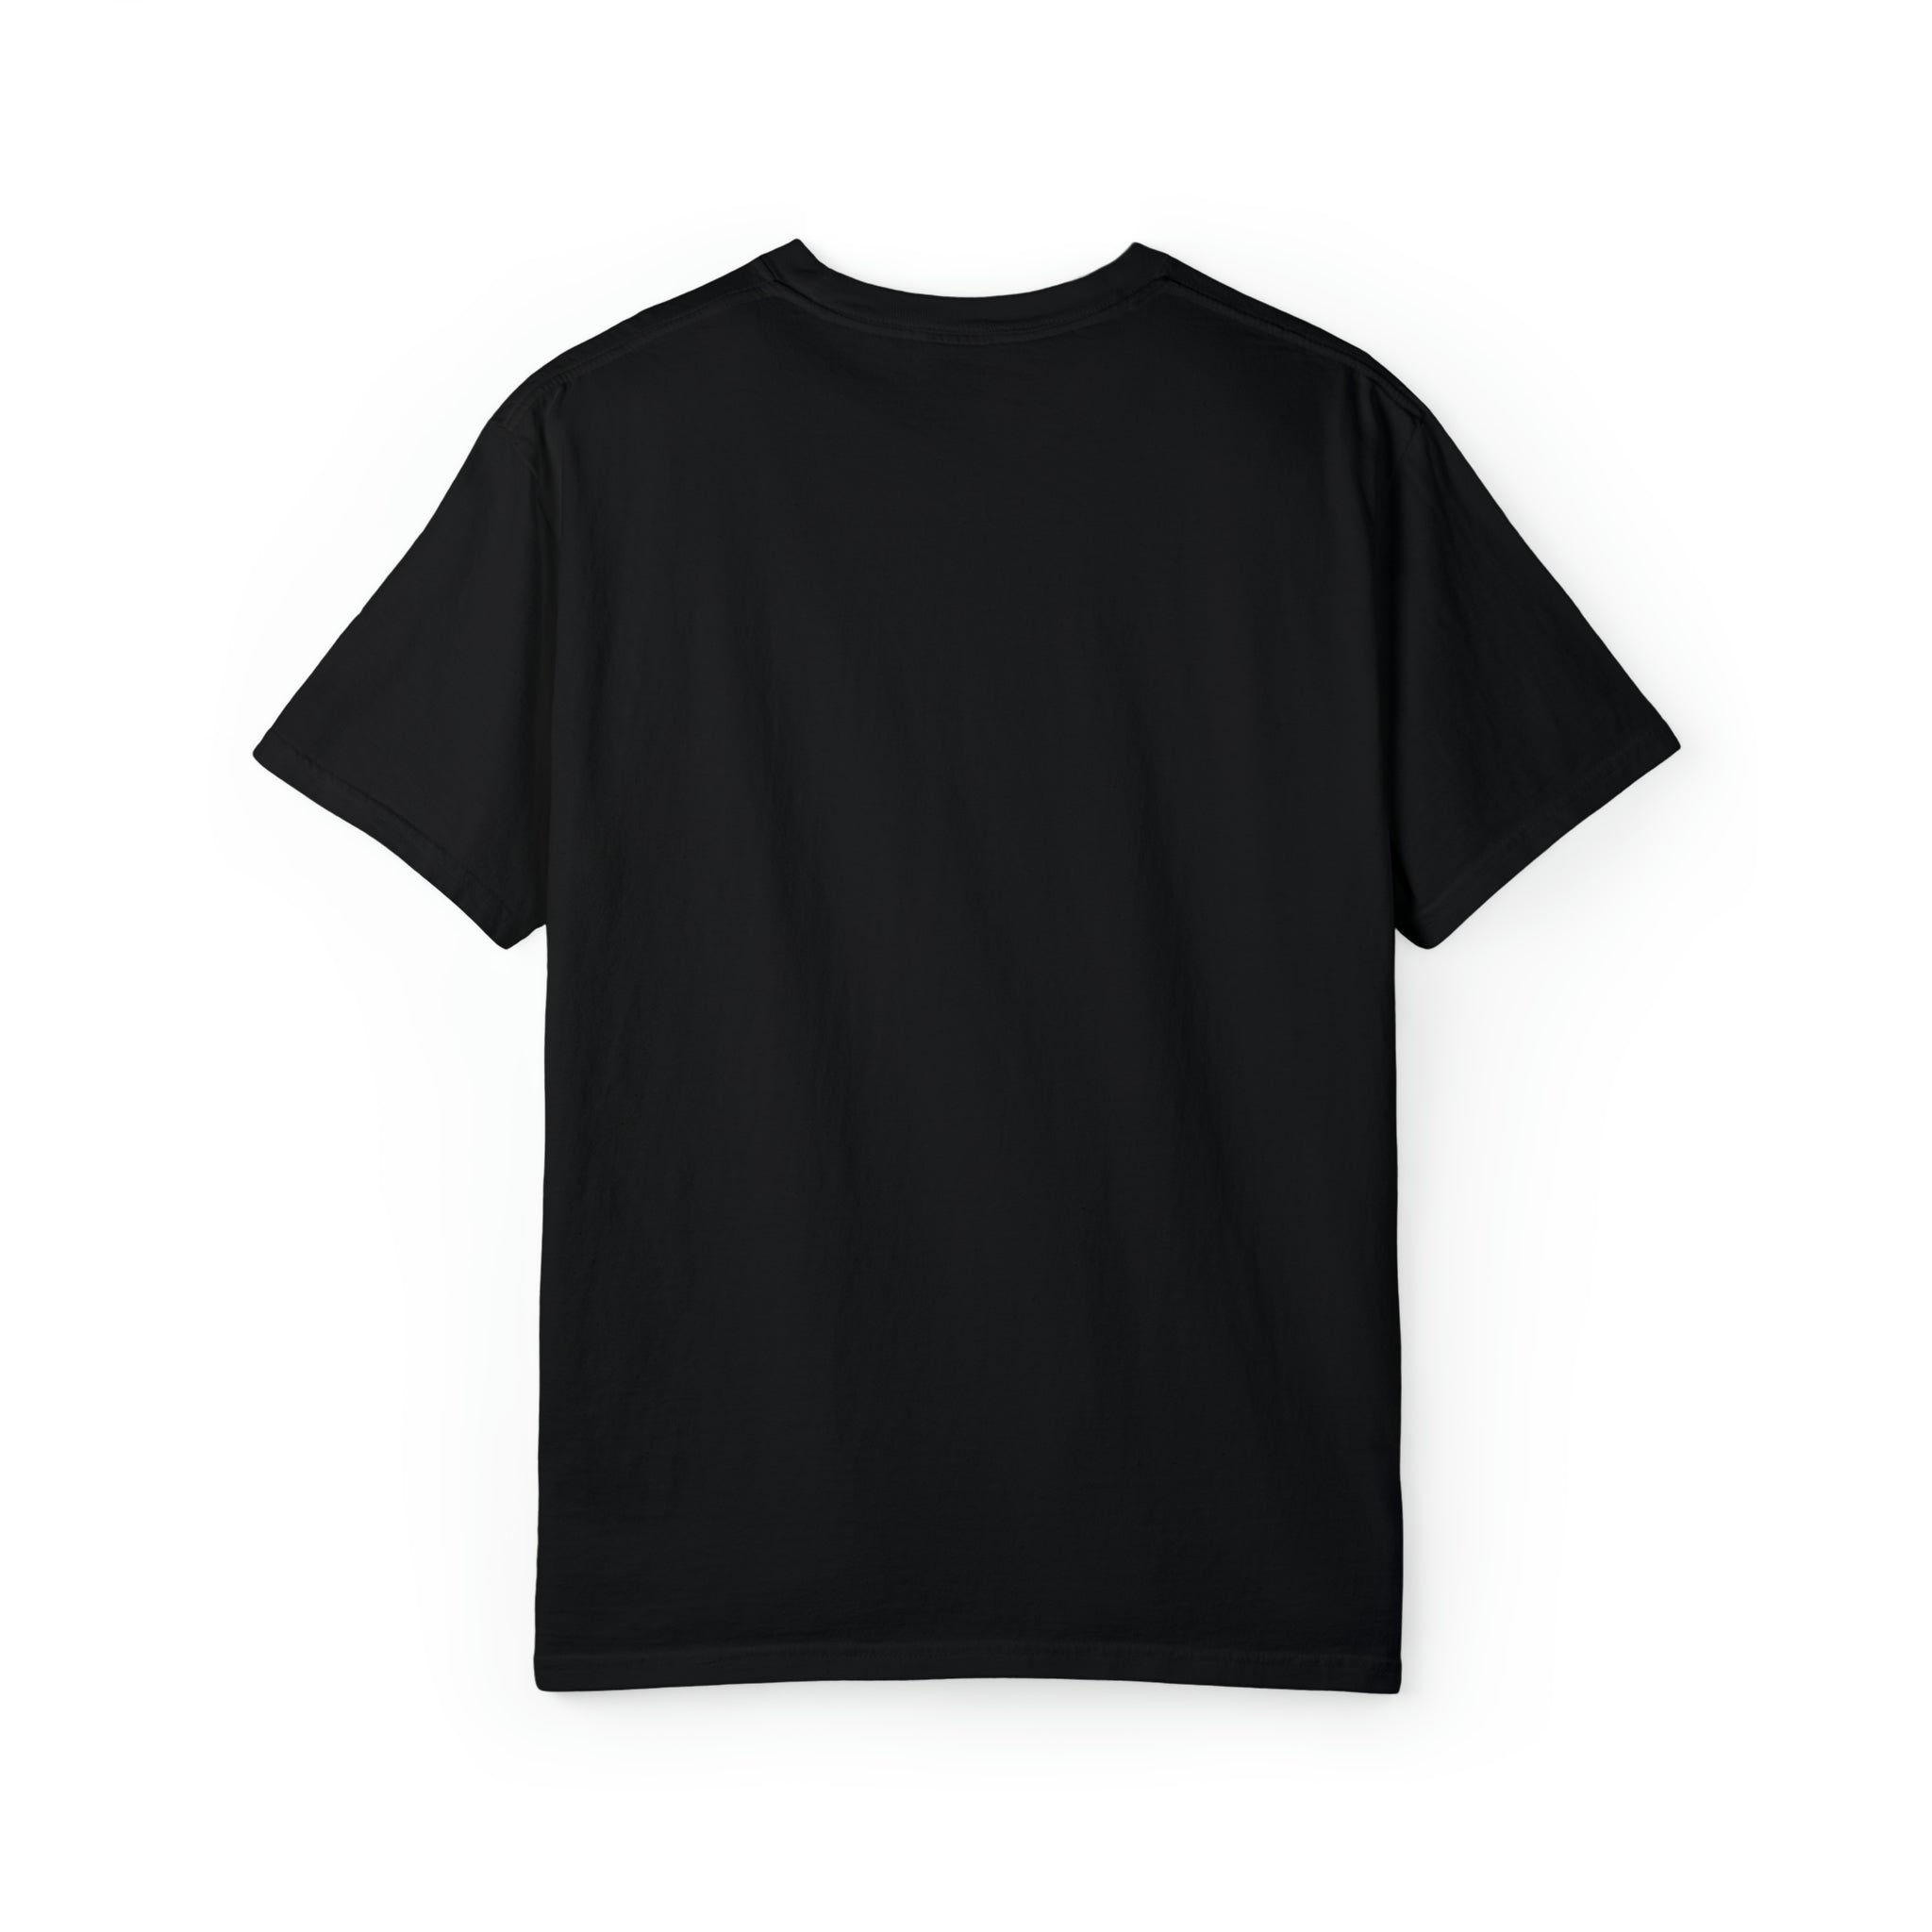 Blind Archer - Unisex Garment-Dyed T-shirt - Variation 2